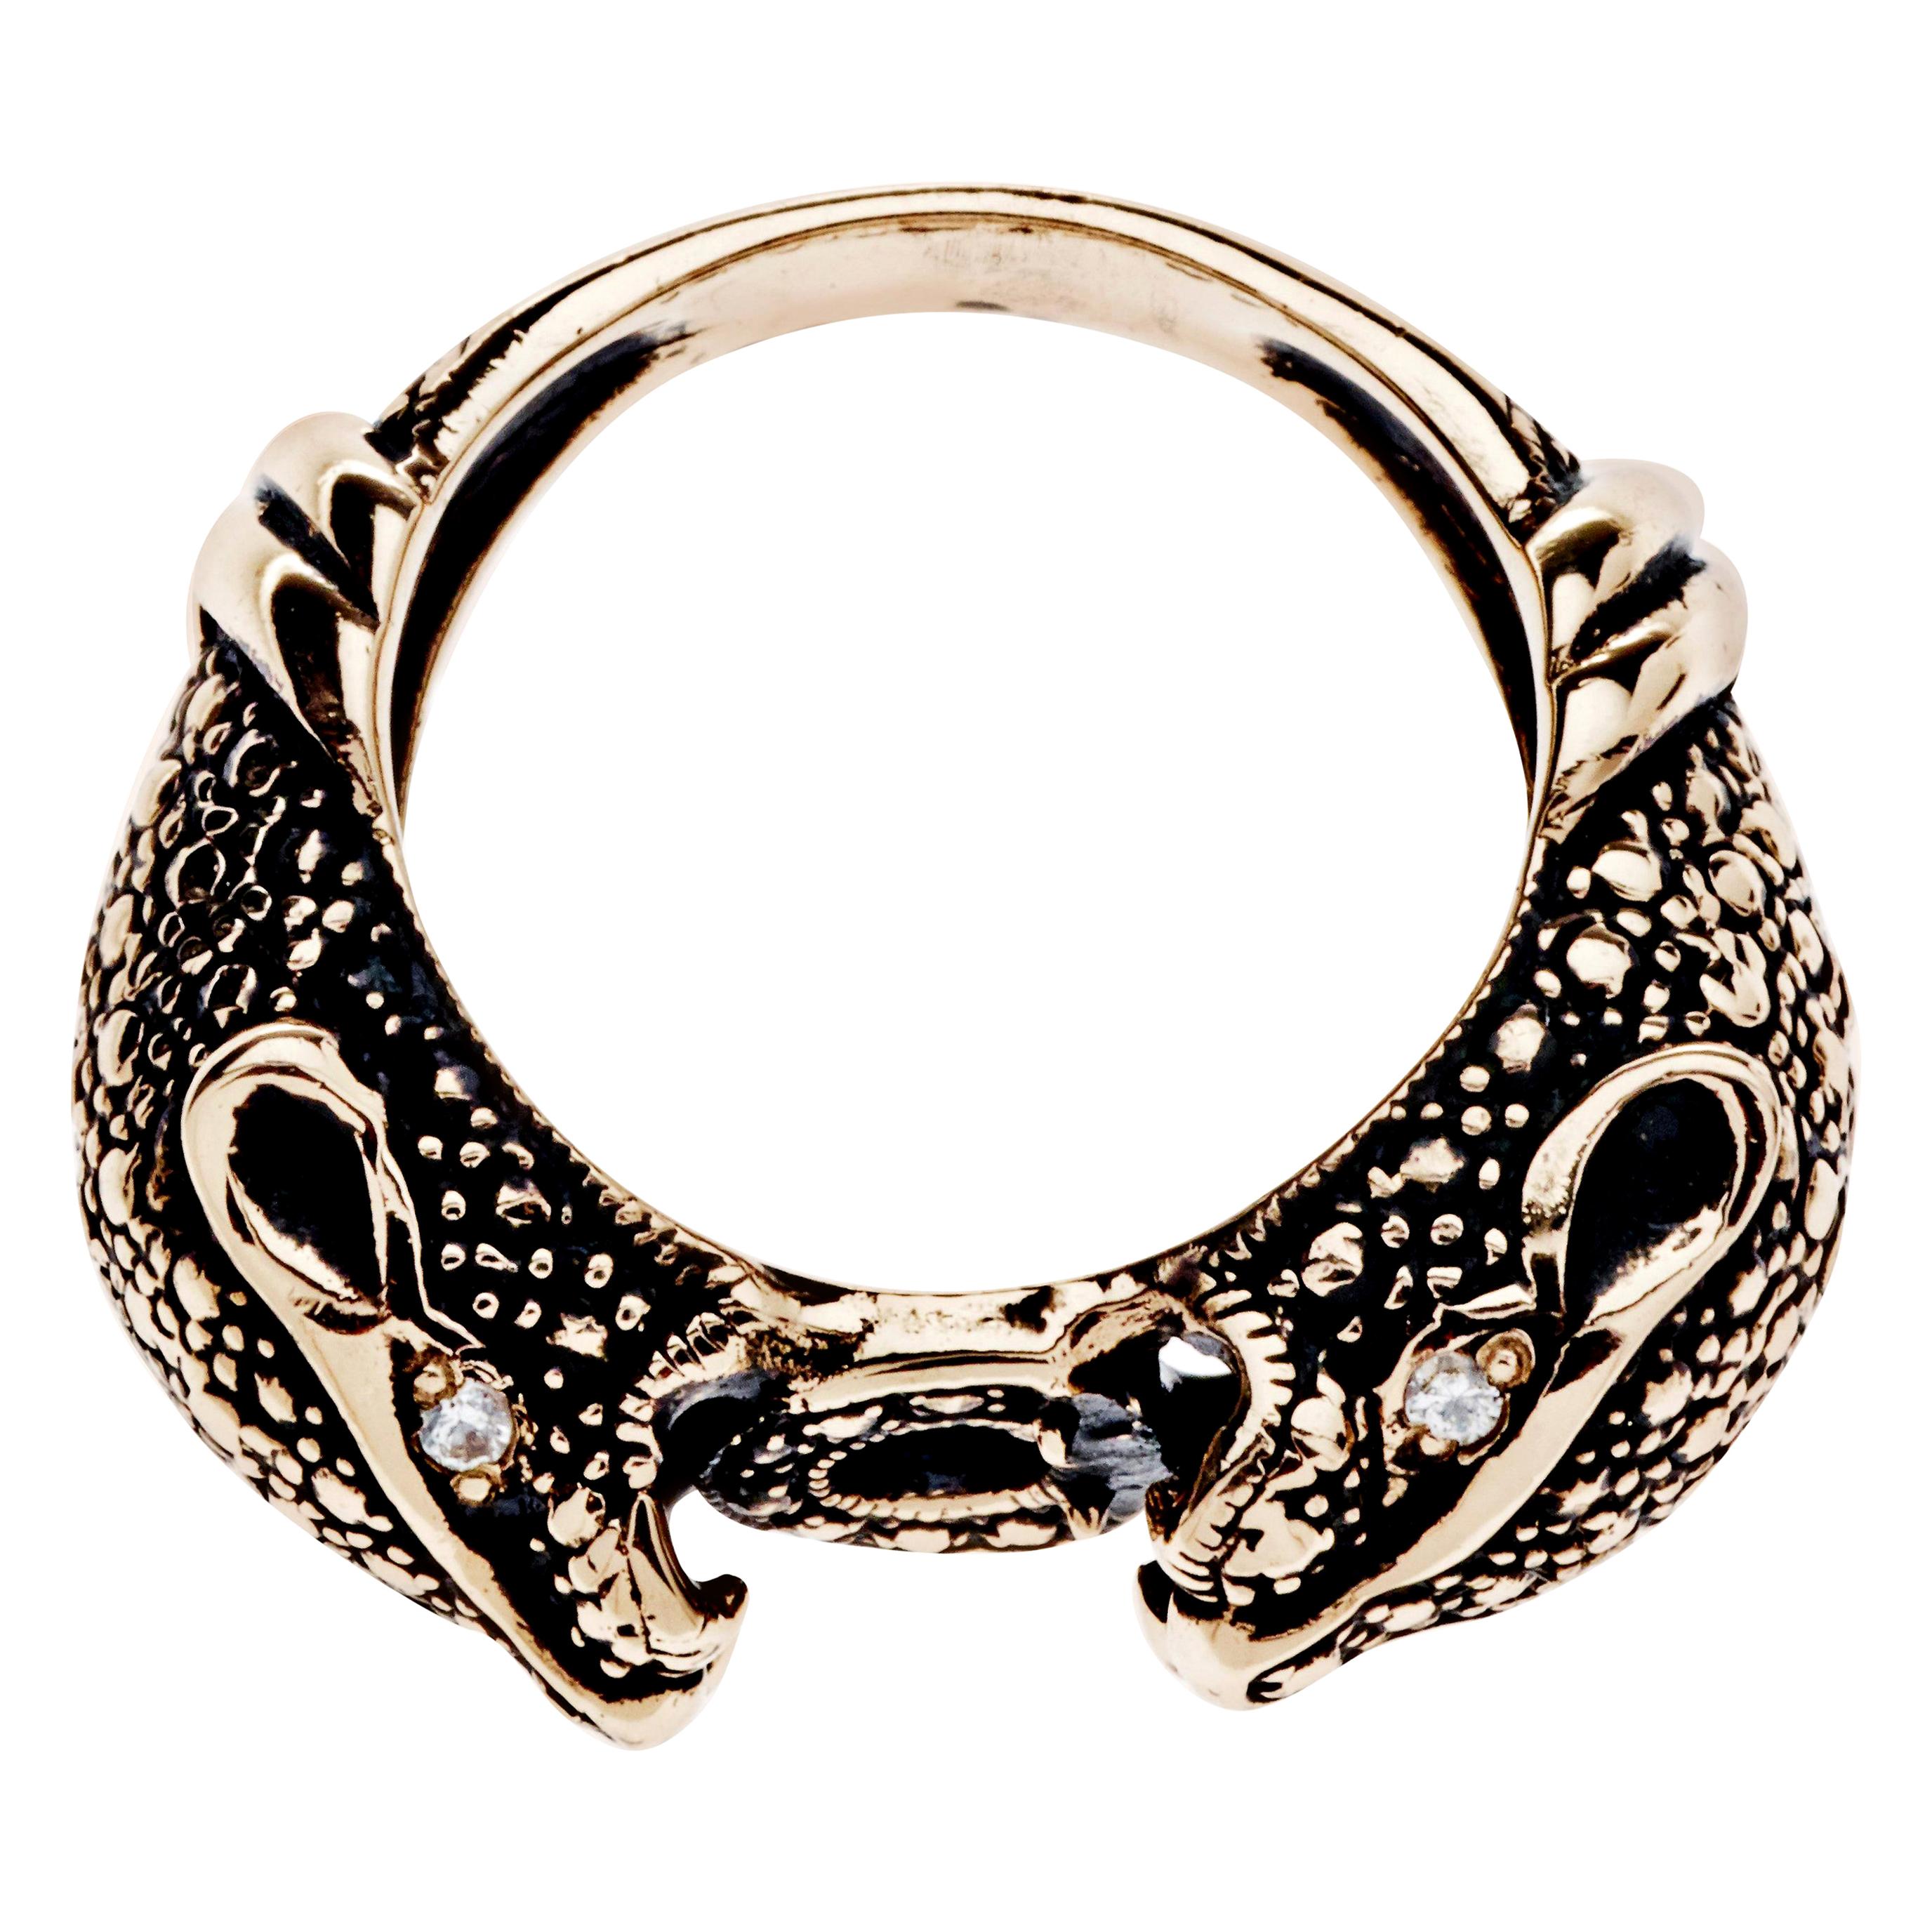 White Diamond Jaguar Ring Bronze Cocktail Statement Ring Animal Jewelry J Dauphin

J DAUPHIN 